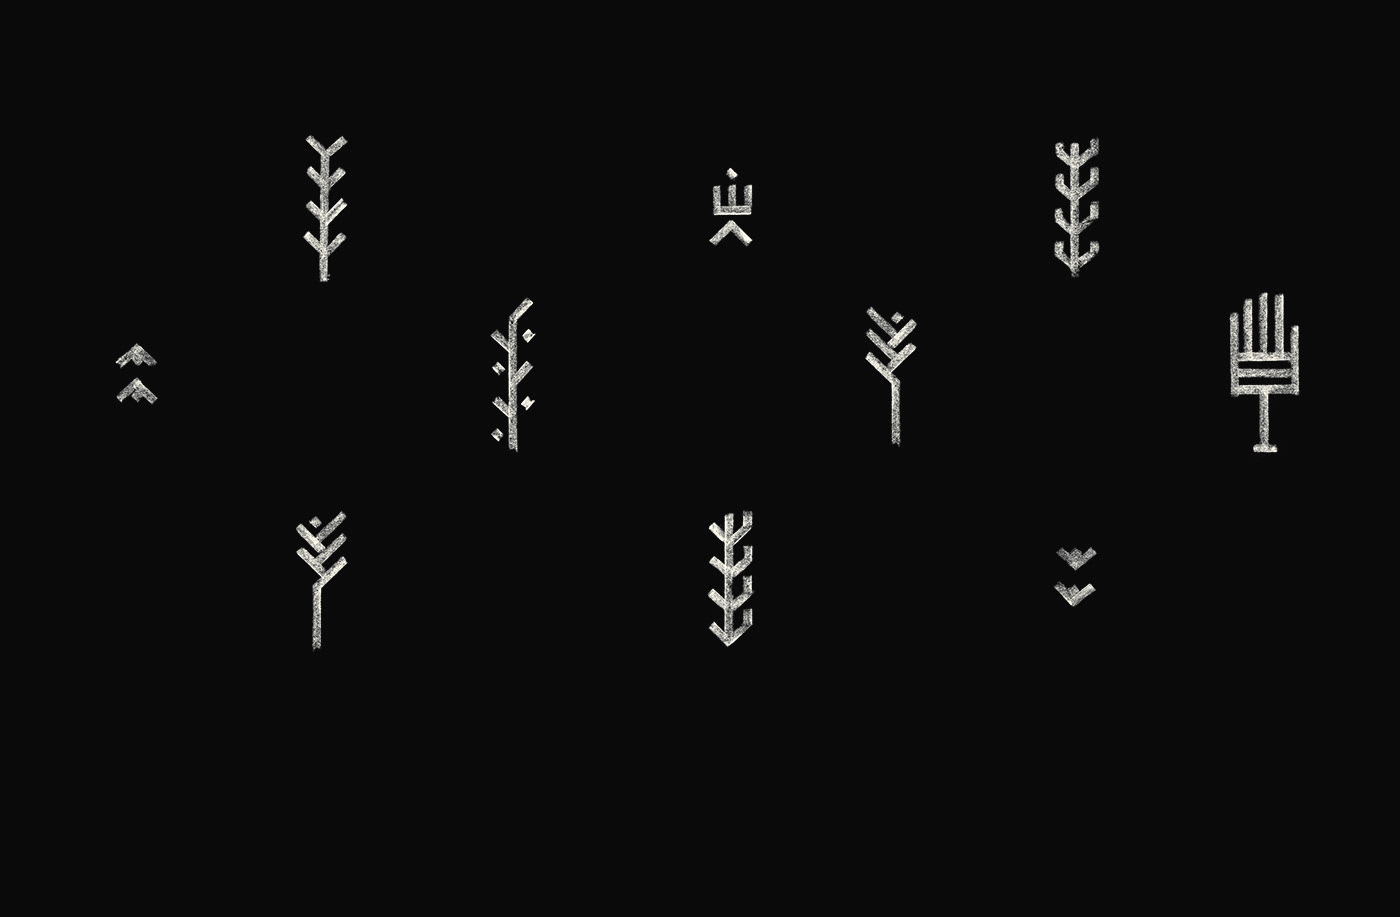 ramuri Piko Fashion  minimalist dark forest lettering Calligraphy   branding  black